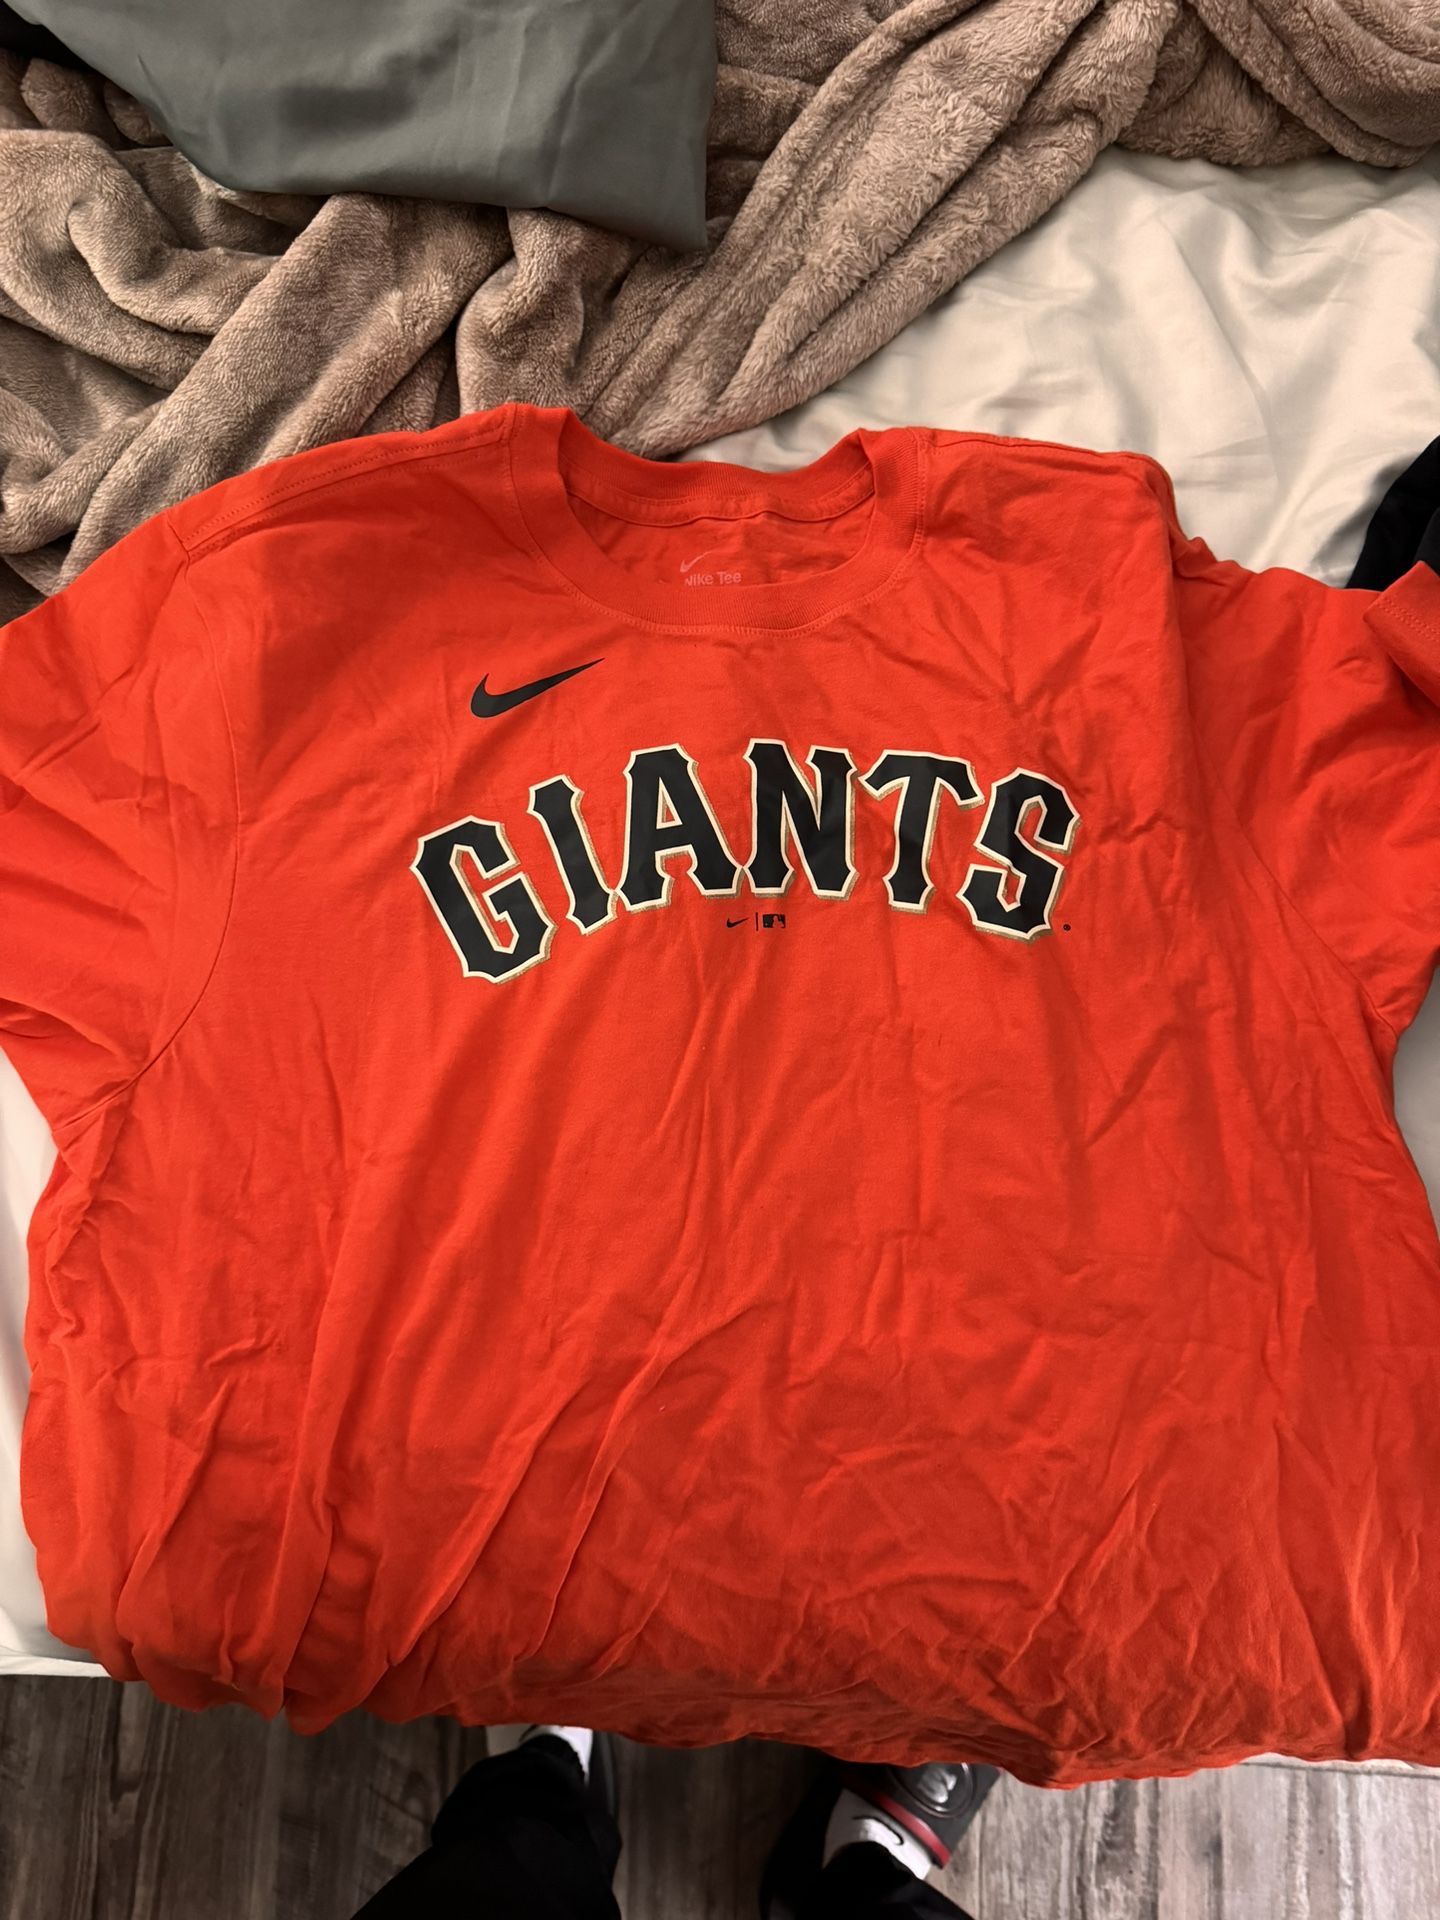 Men’s XL Nike San Francisco Giants Shirt